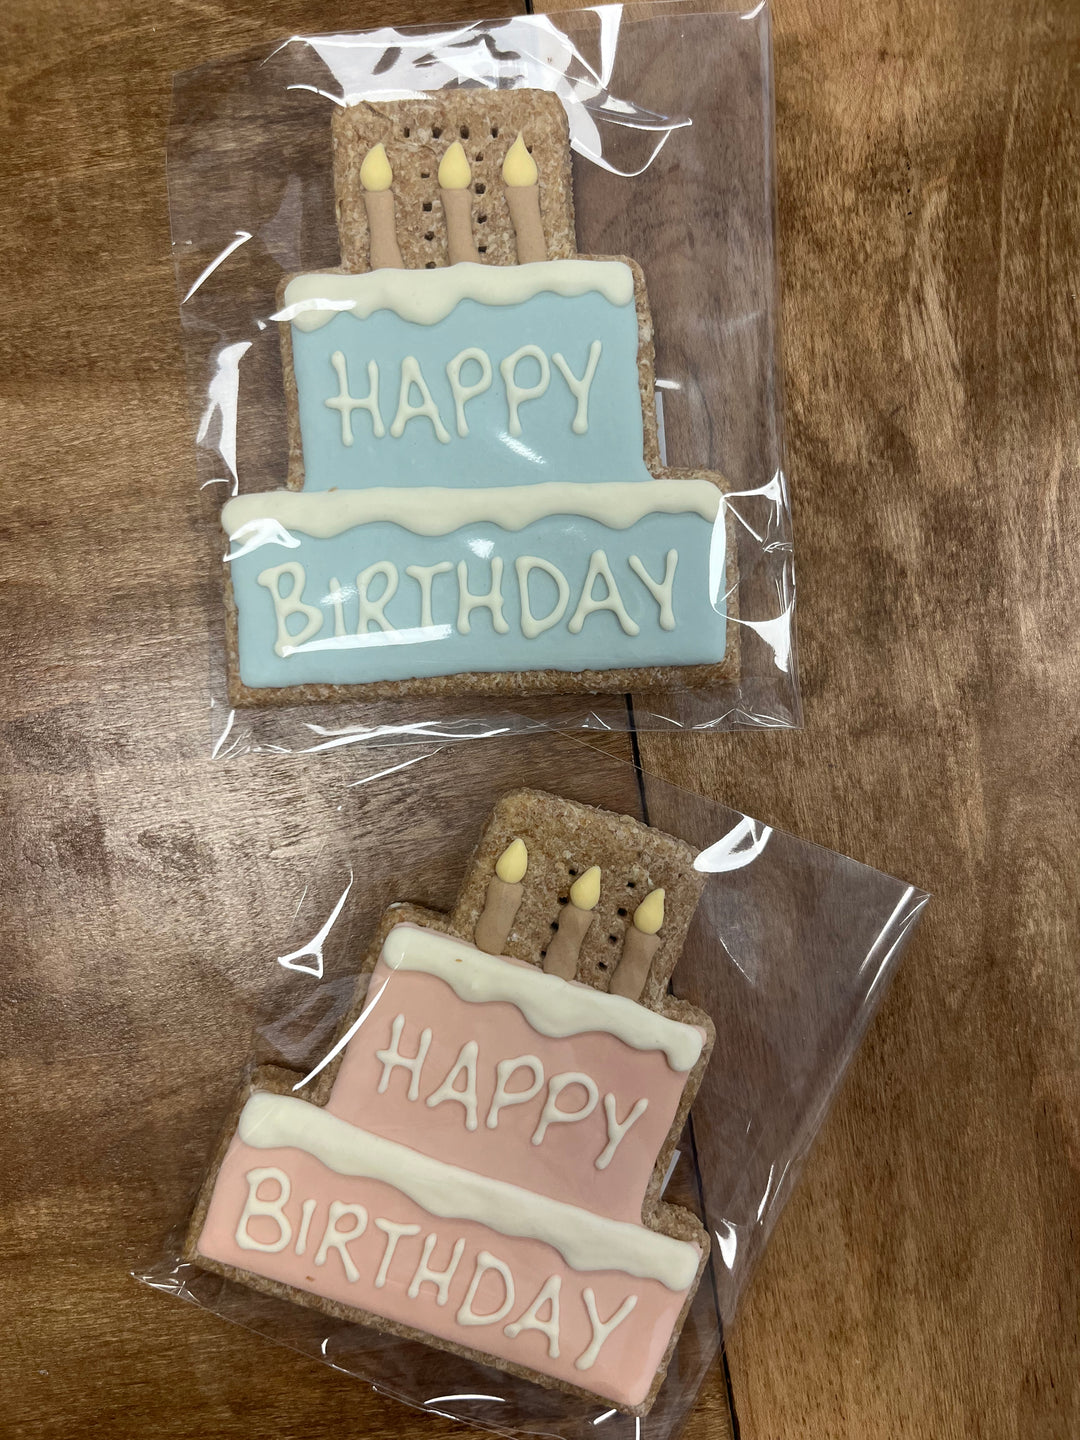 Bakery Table - Birthday Cake Cookie